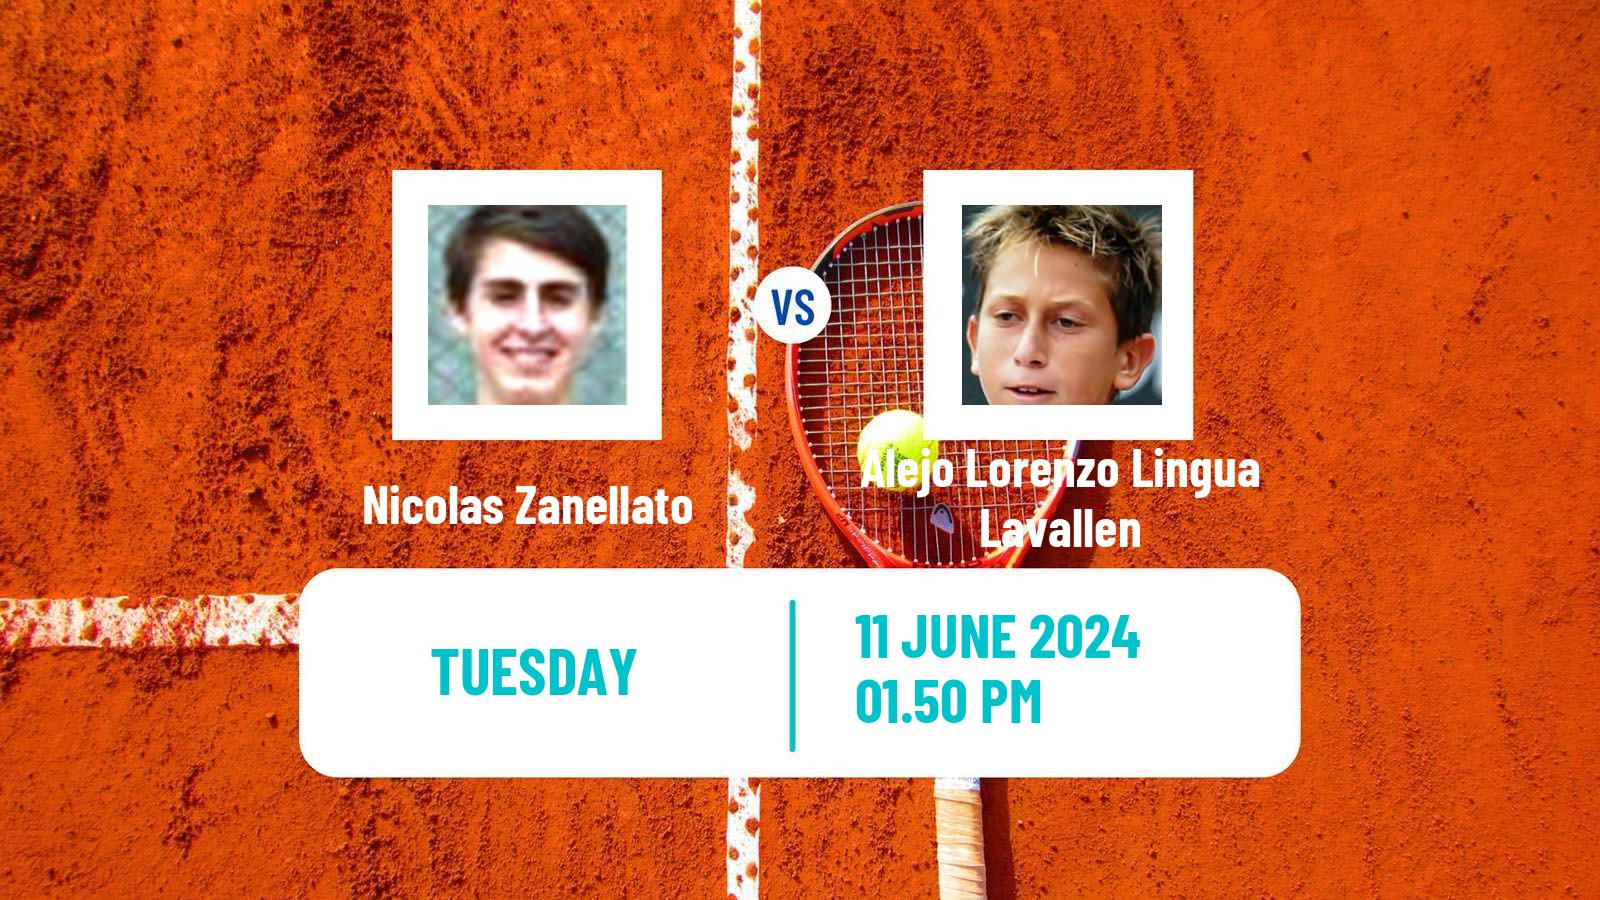 Tennis Lima Challenger Men Nicolas Zanellato - Alejo Lorenzo Lingua Lavallen